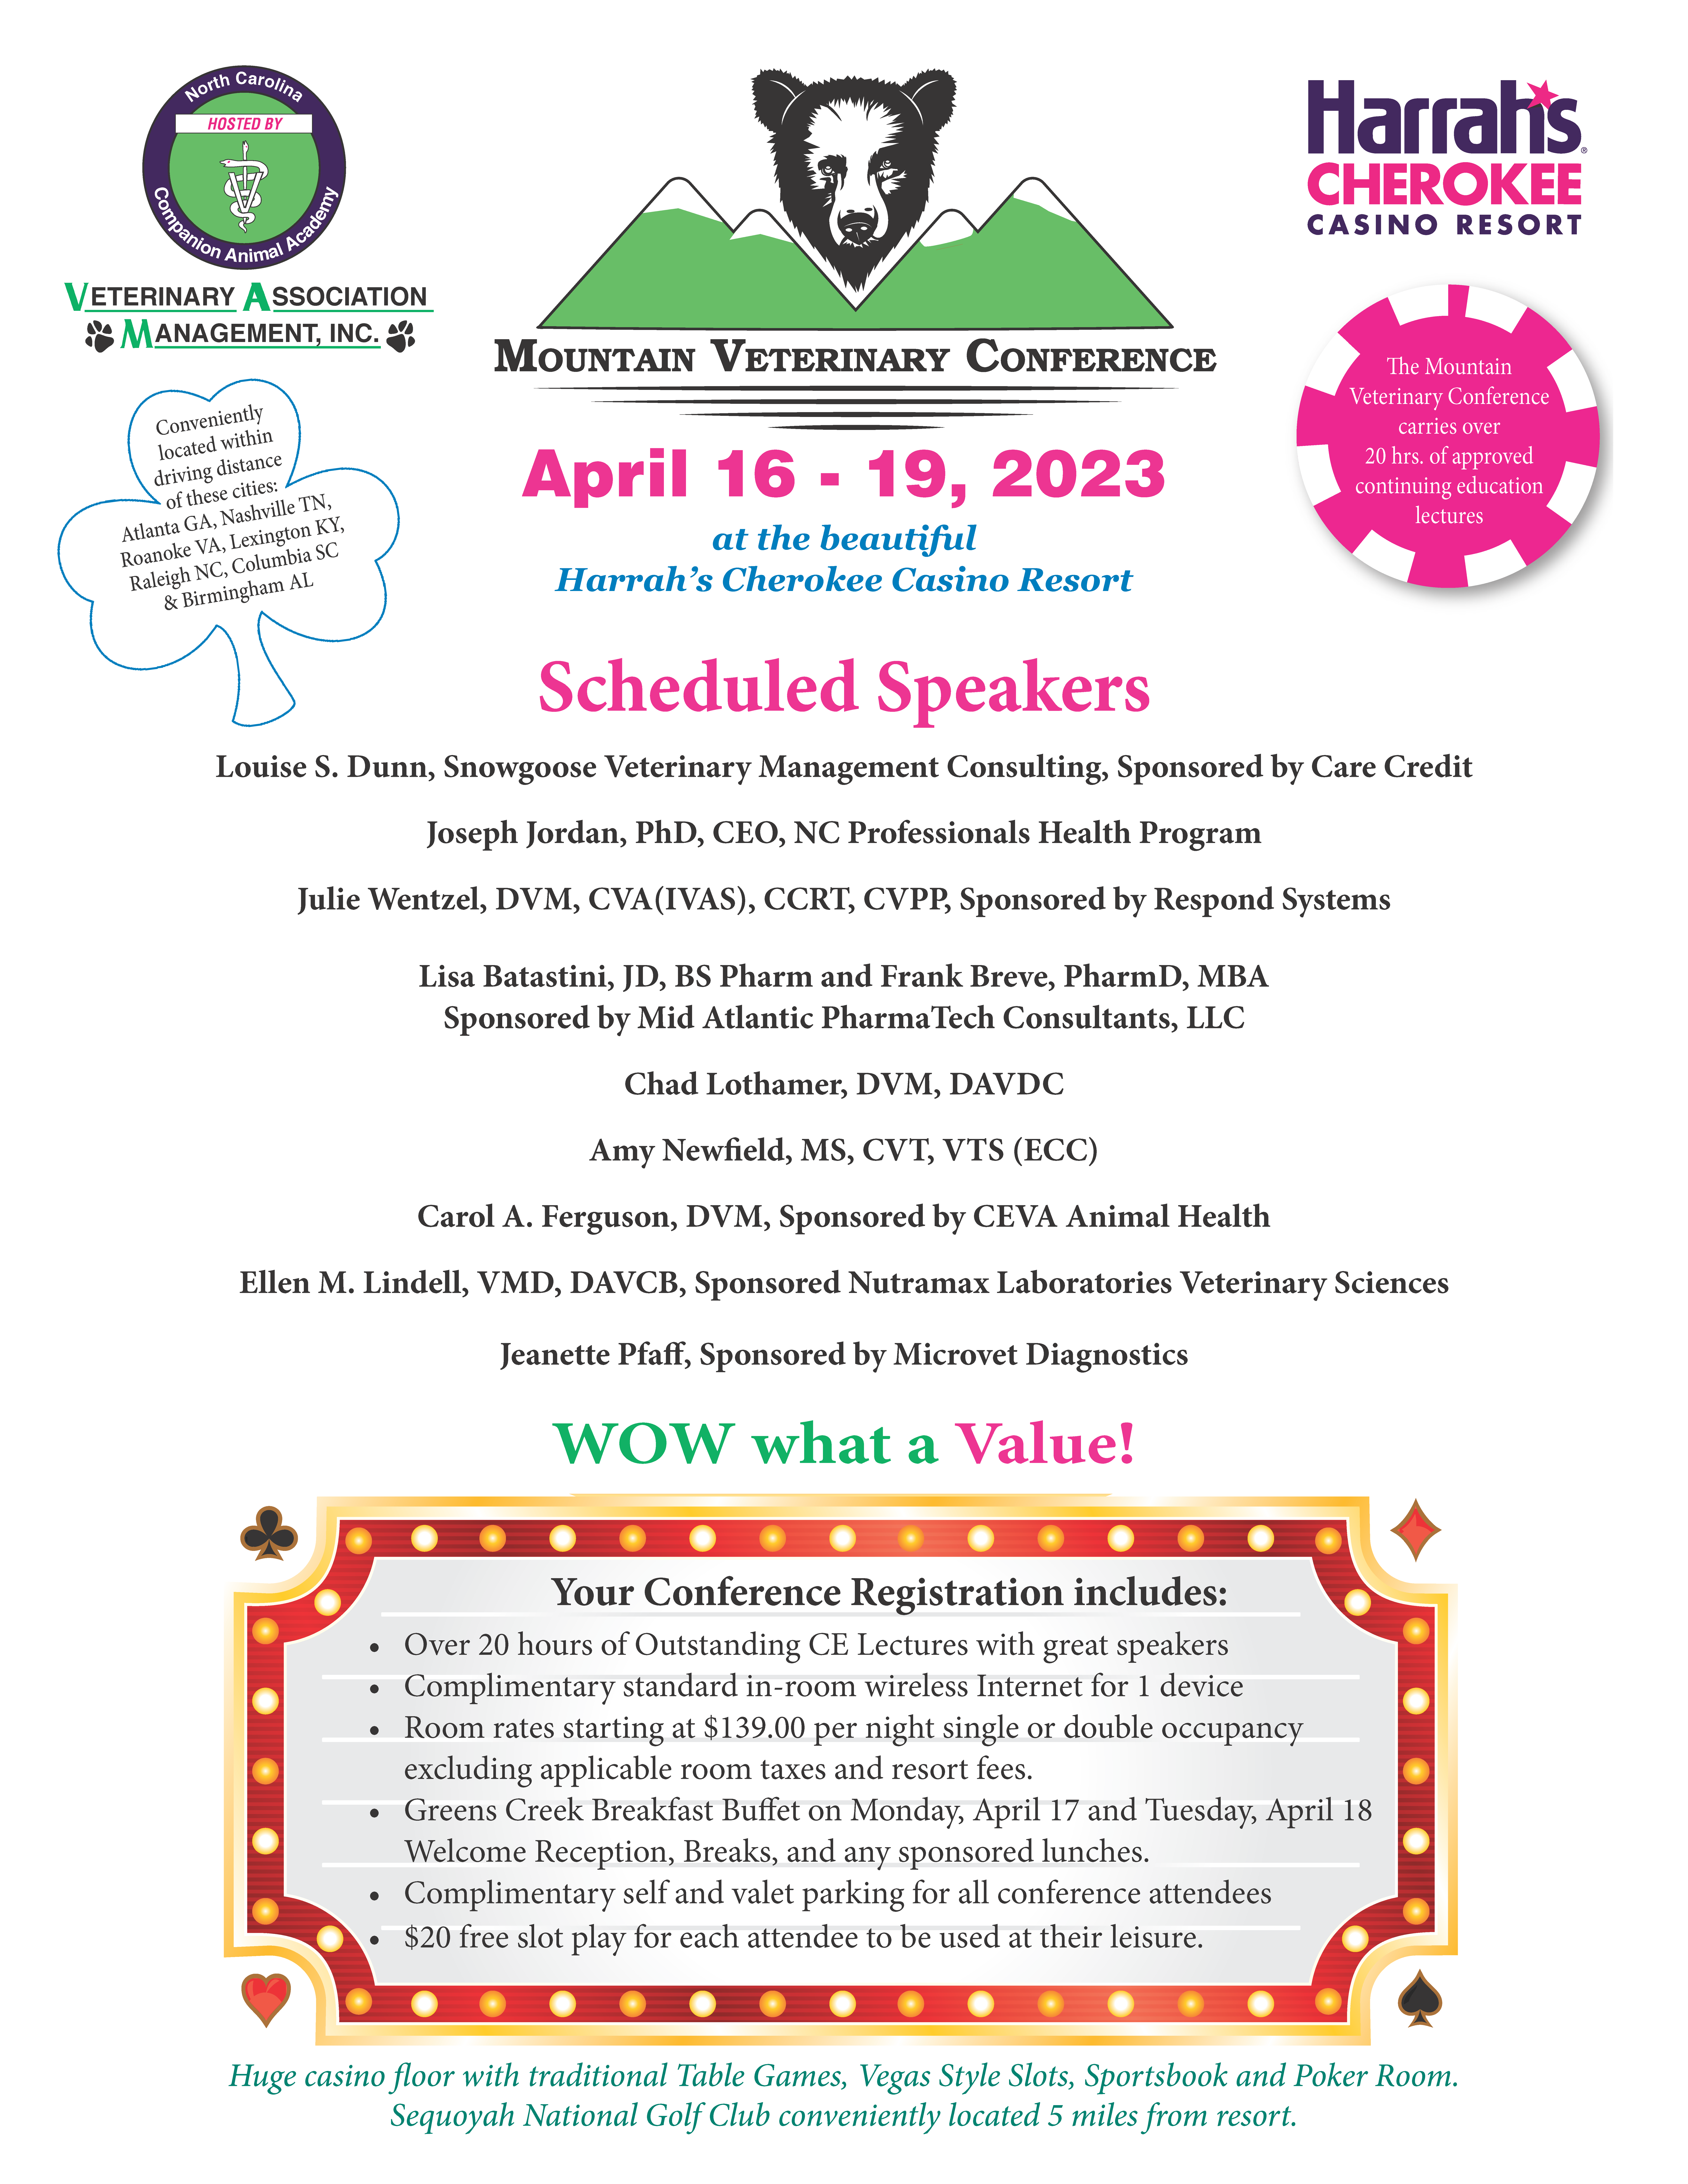 Mountain Veterinary Conference, April 16 - 19, 2023 at the beautiful Harrah's Cherokee Casino Resort